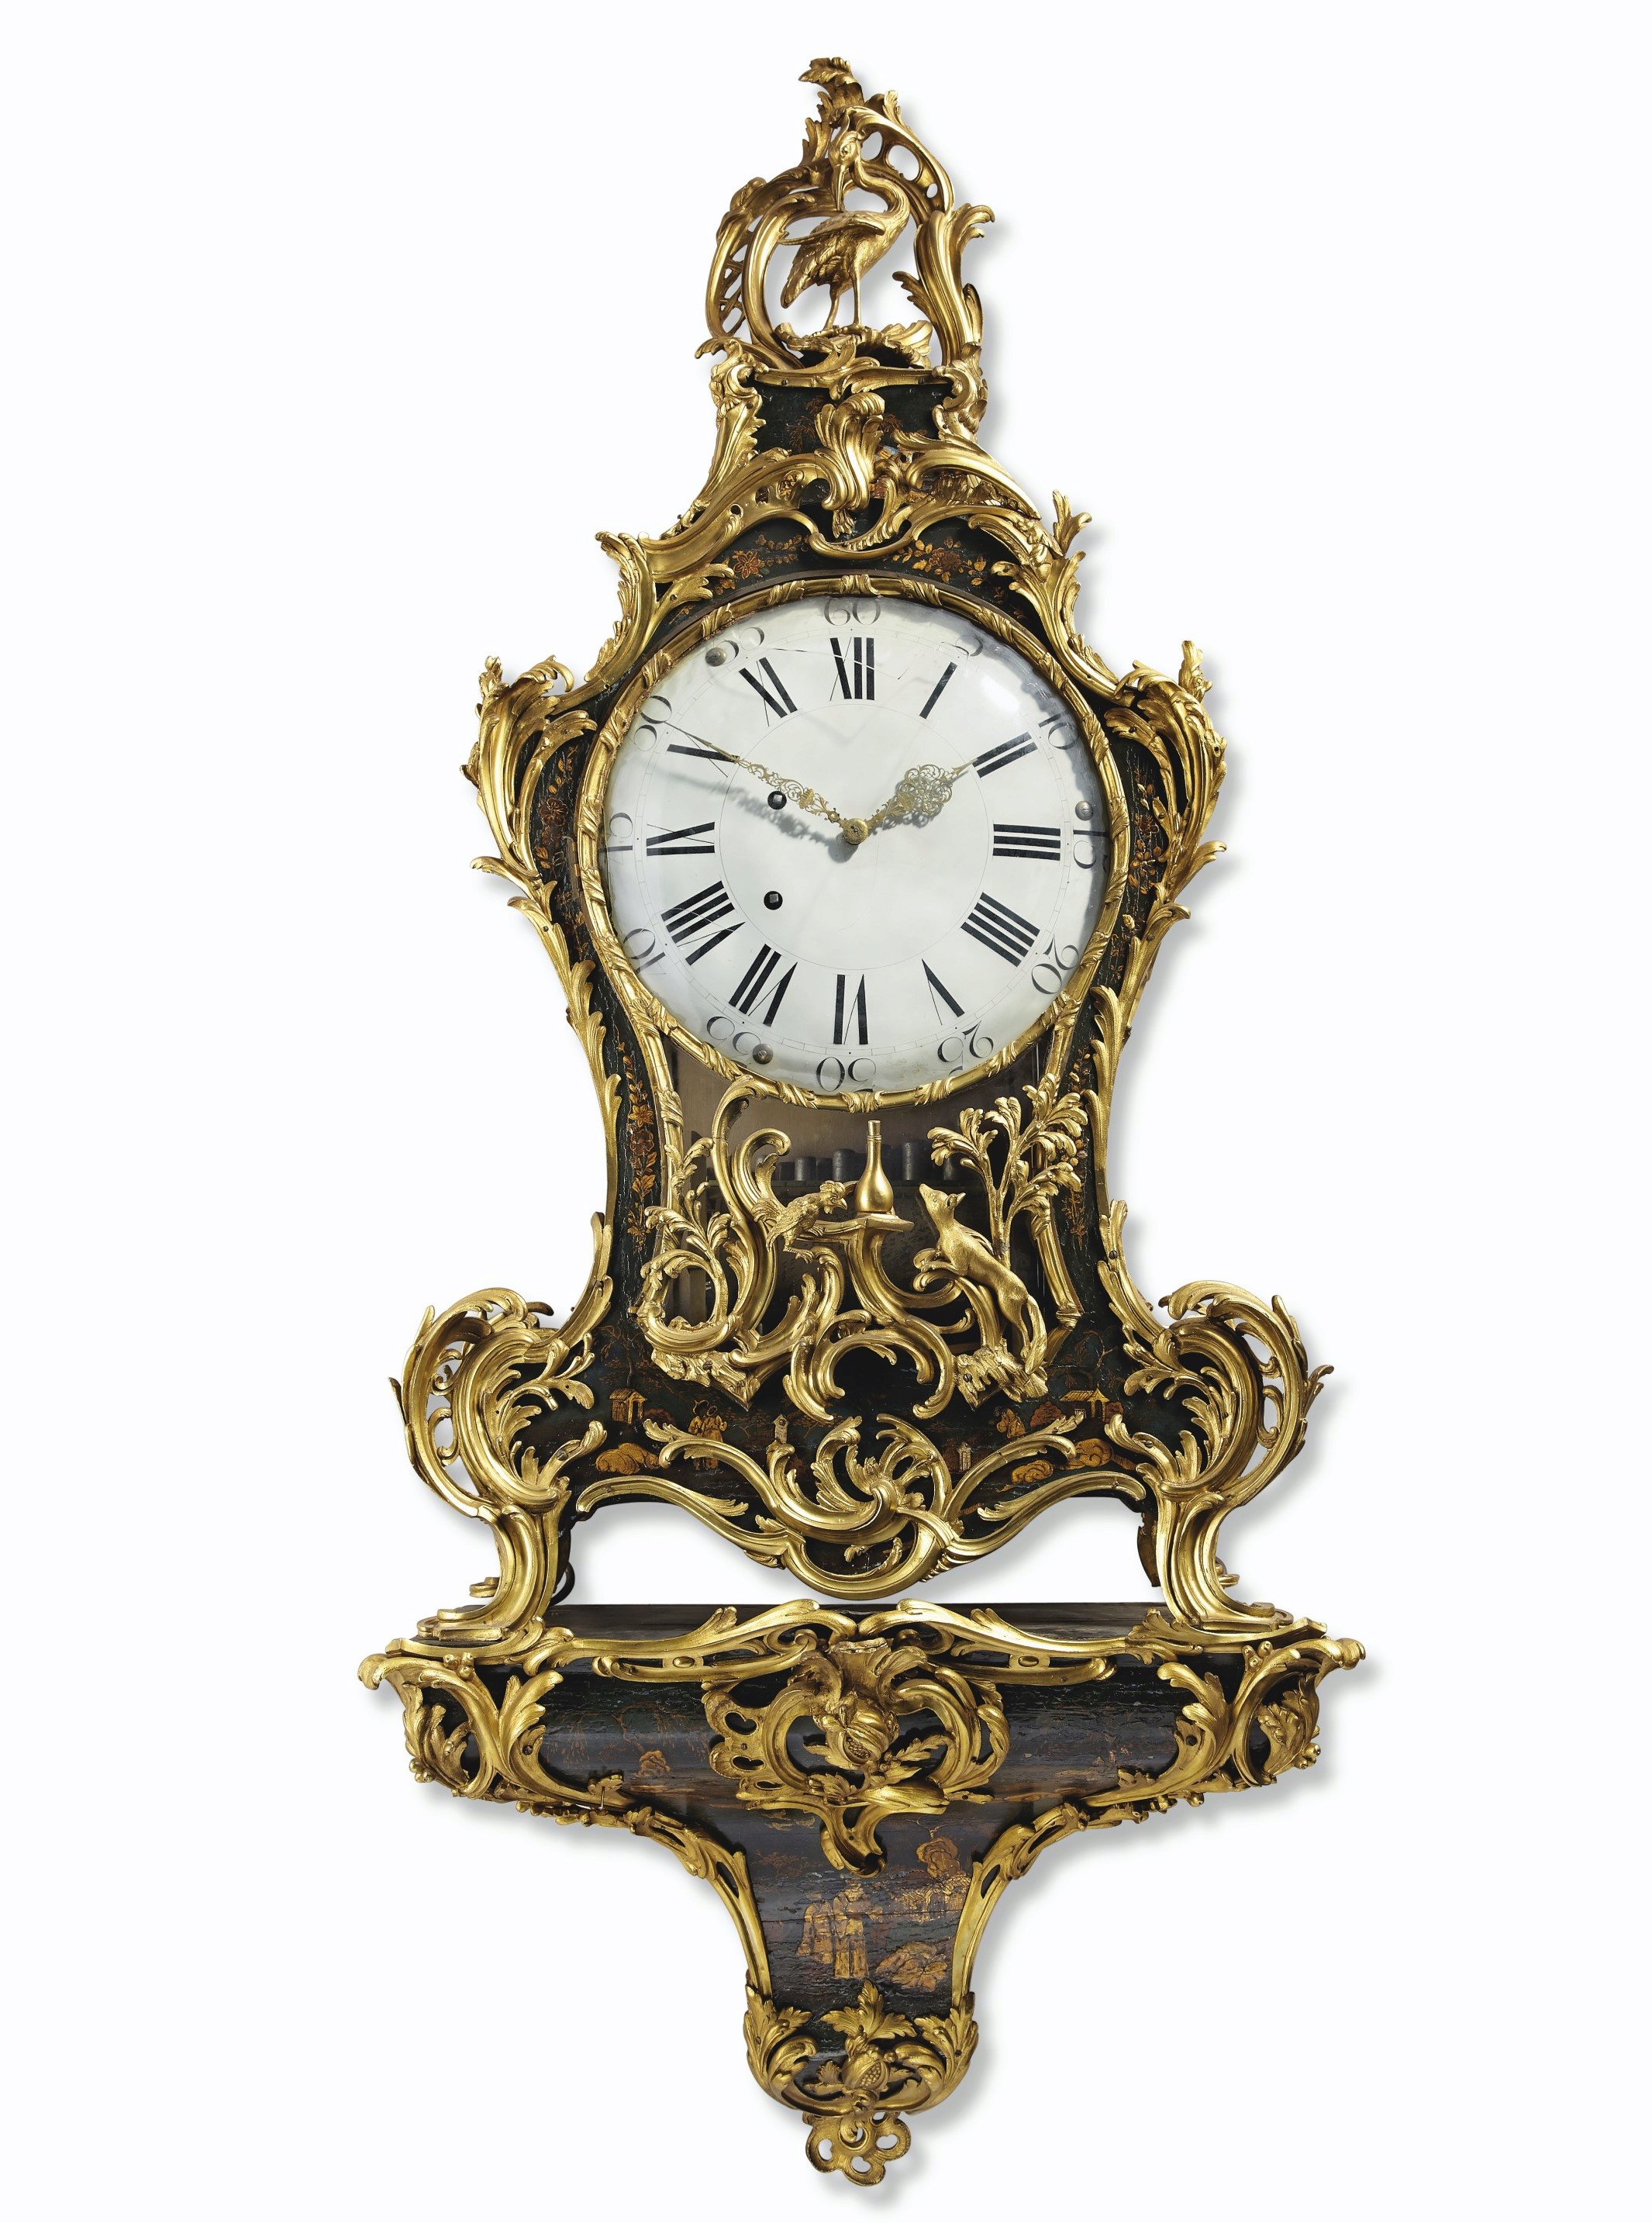 Horloges et pendules du XVIIIe siècle - Page 2 2020_n38